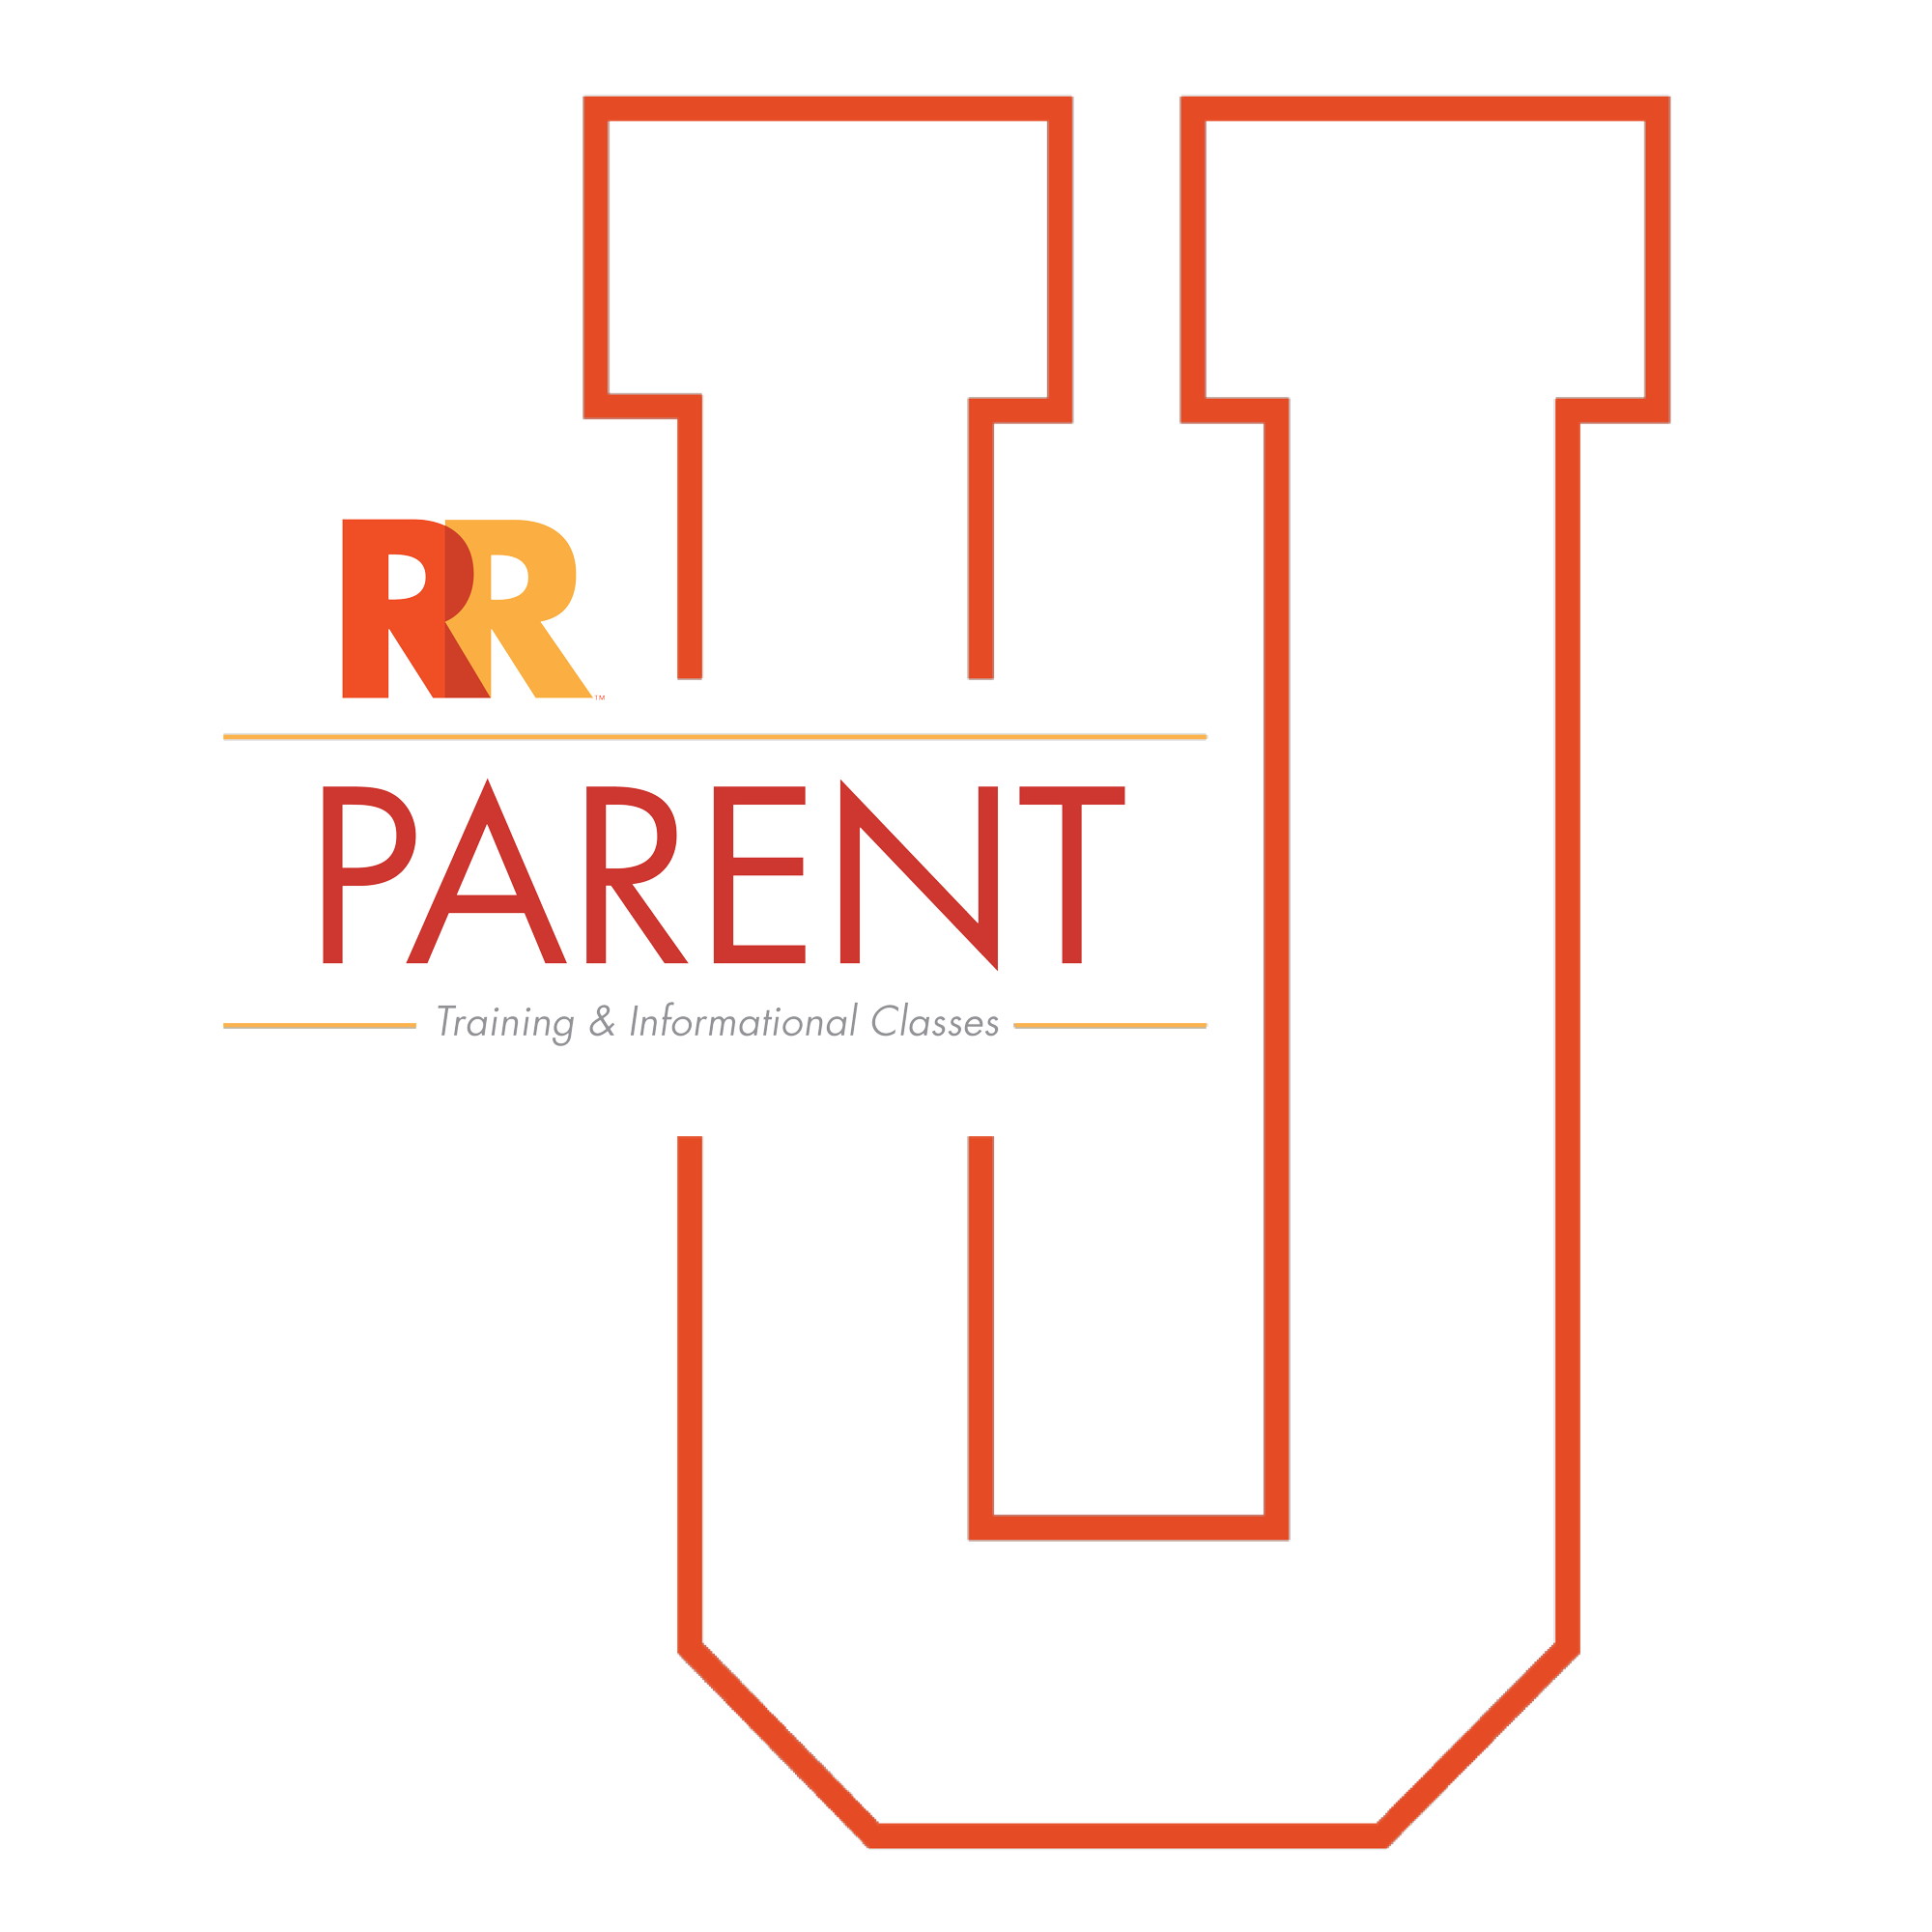 Parent University logo